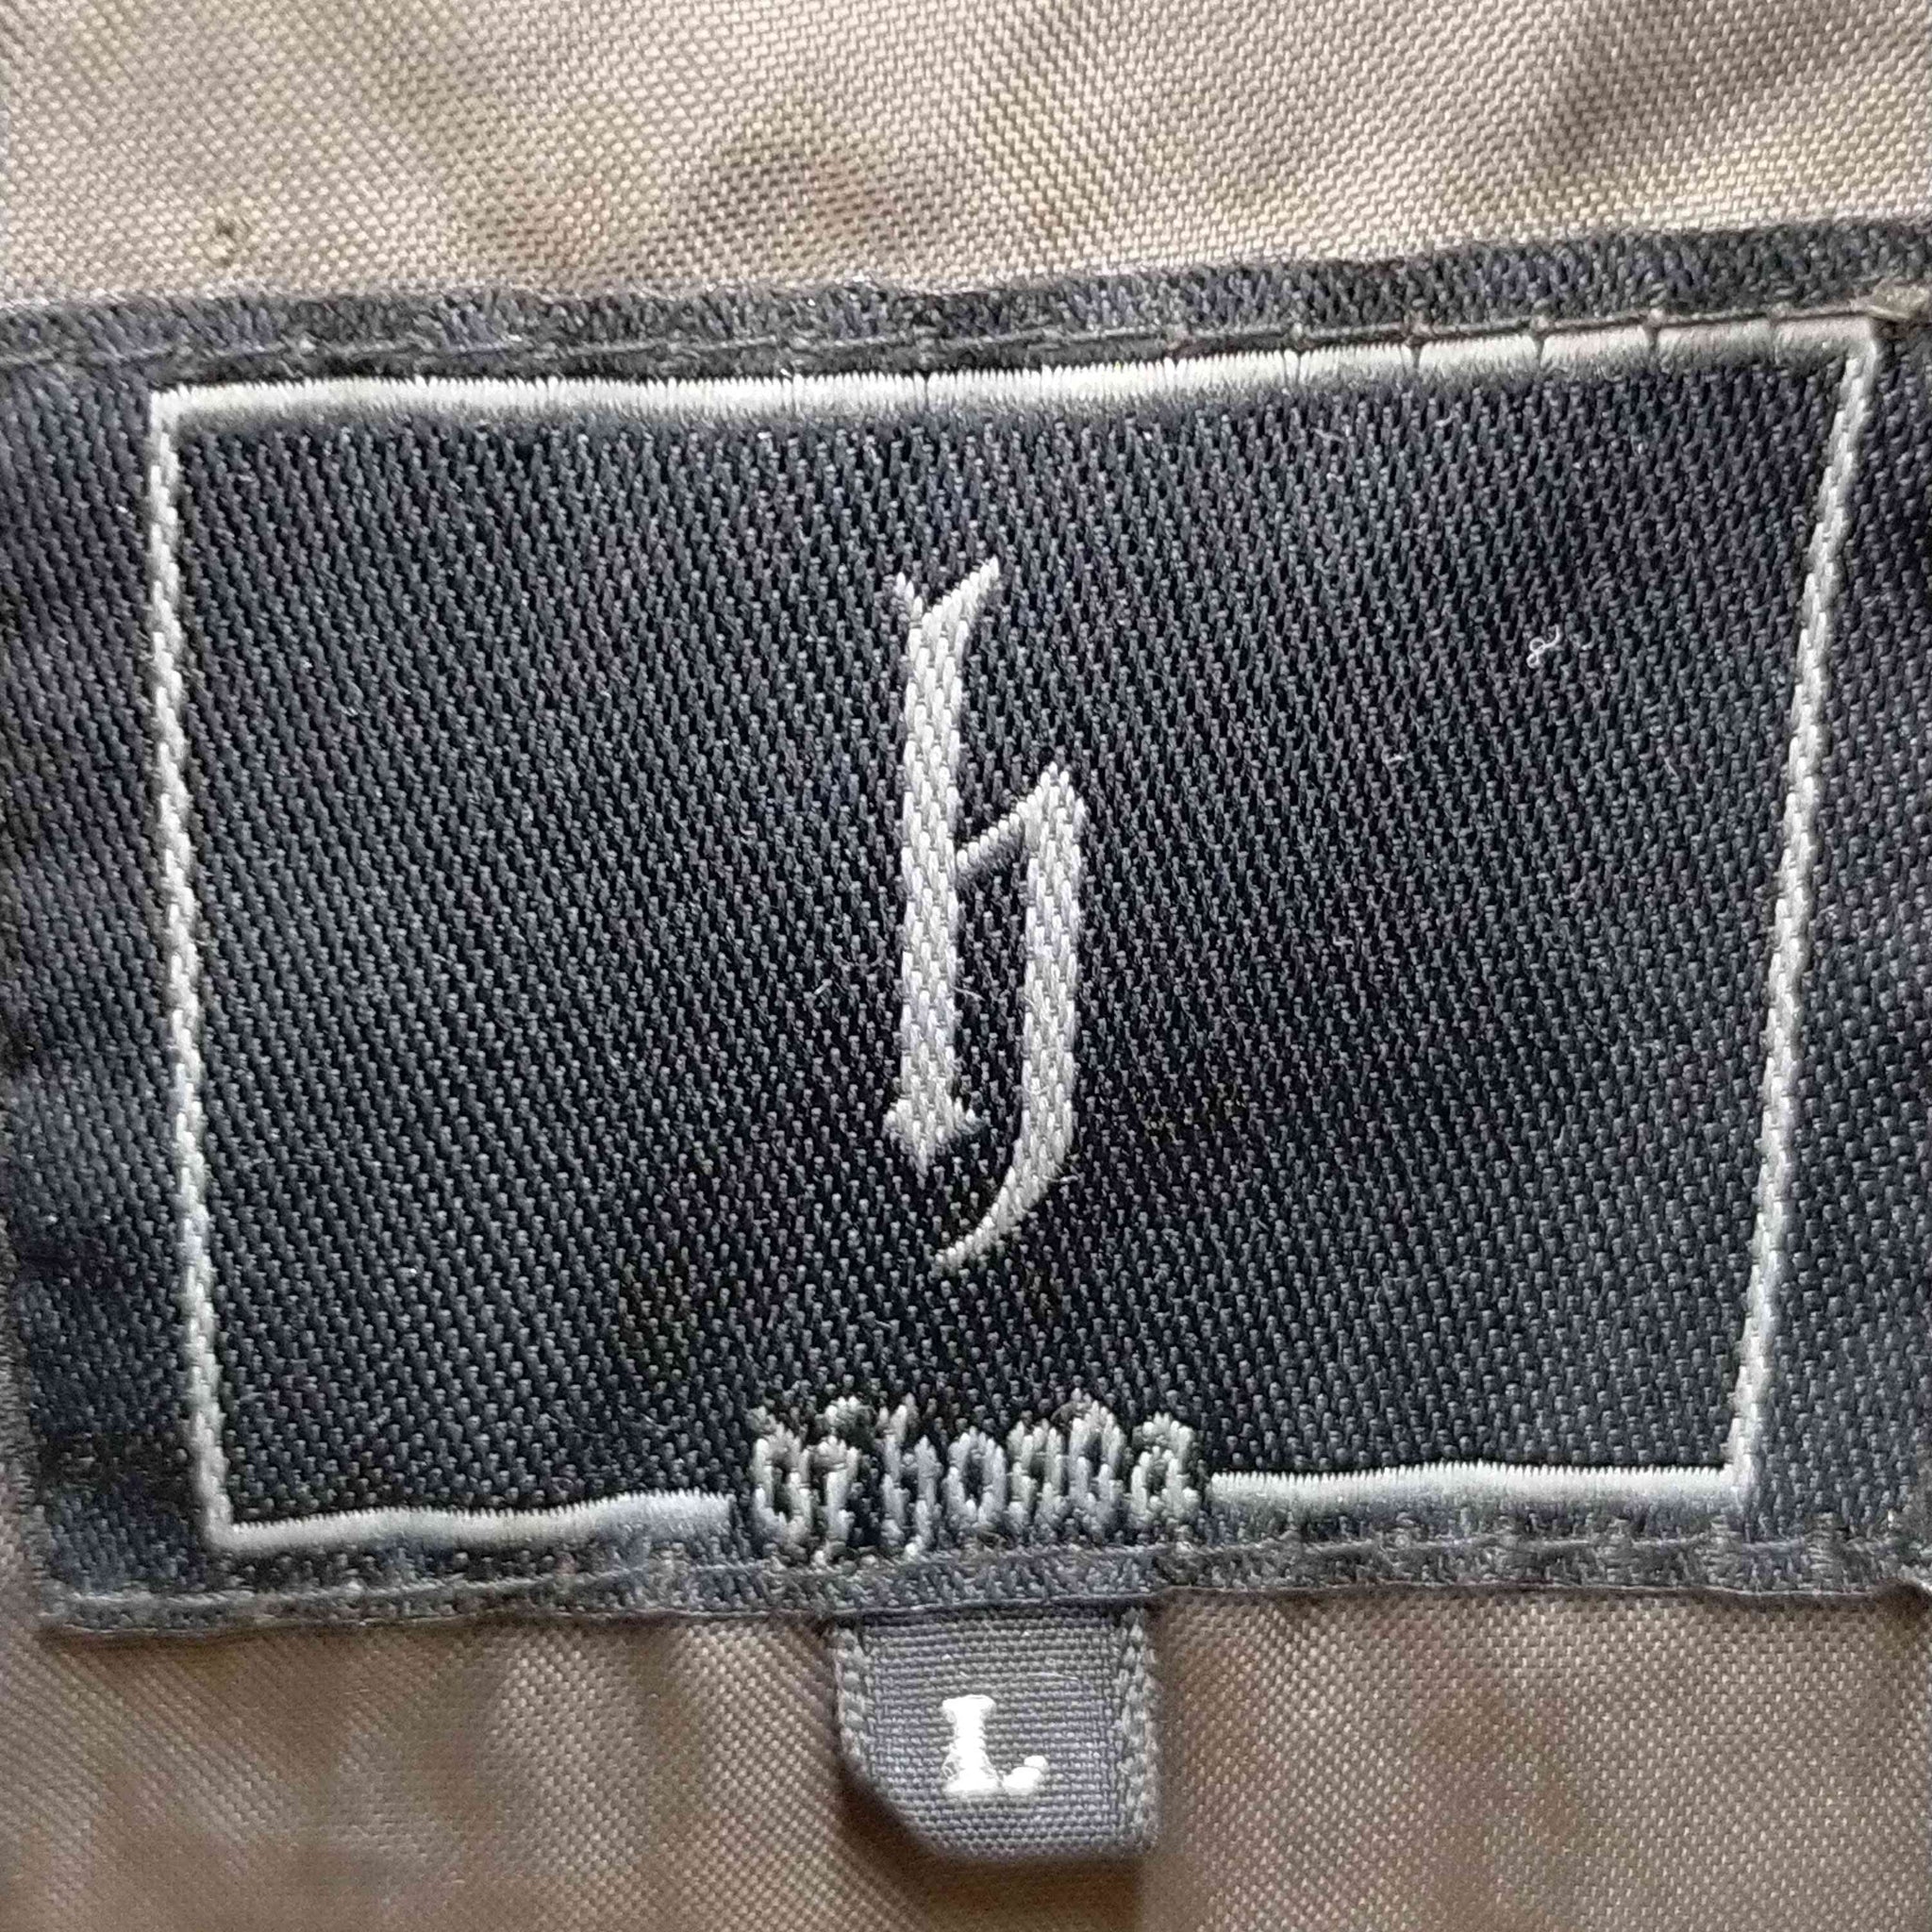 DJ HONDA(ディージェーホンダ)90-00S ロゴ刺繍 ダウンジャケット